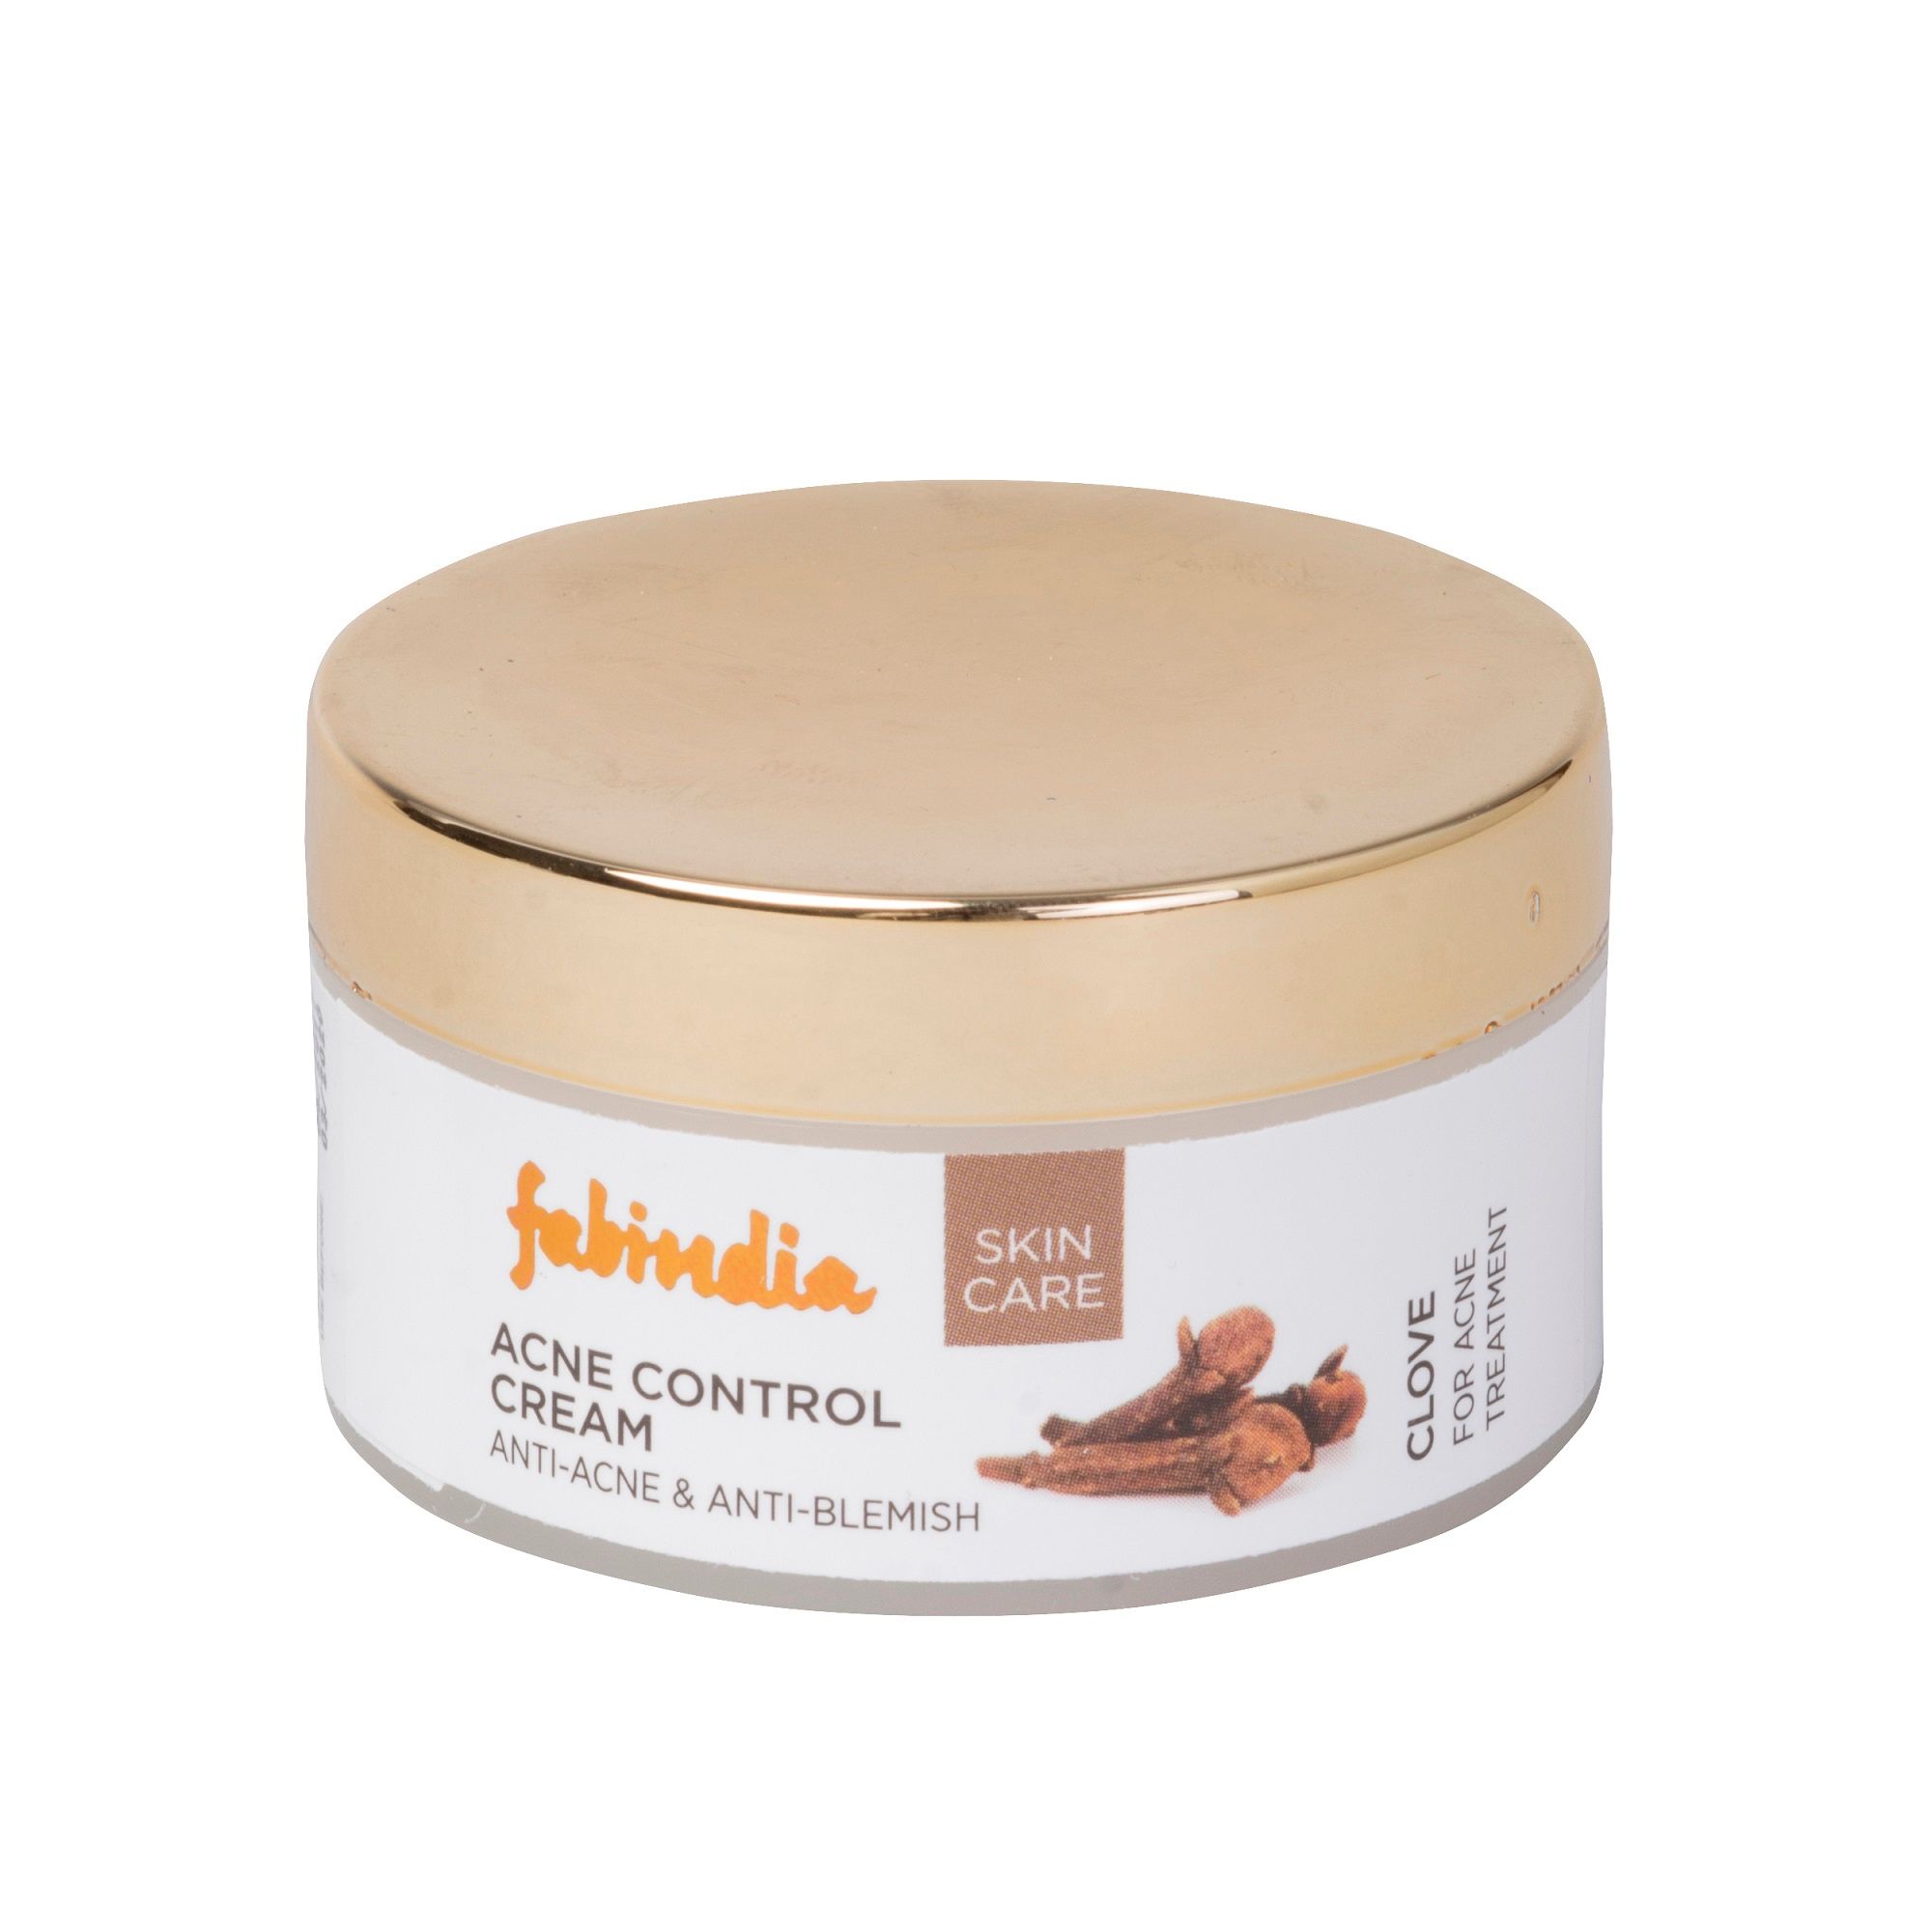 Fabindia Clove Cream for Acne Control